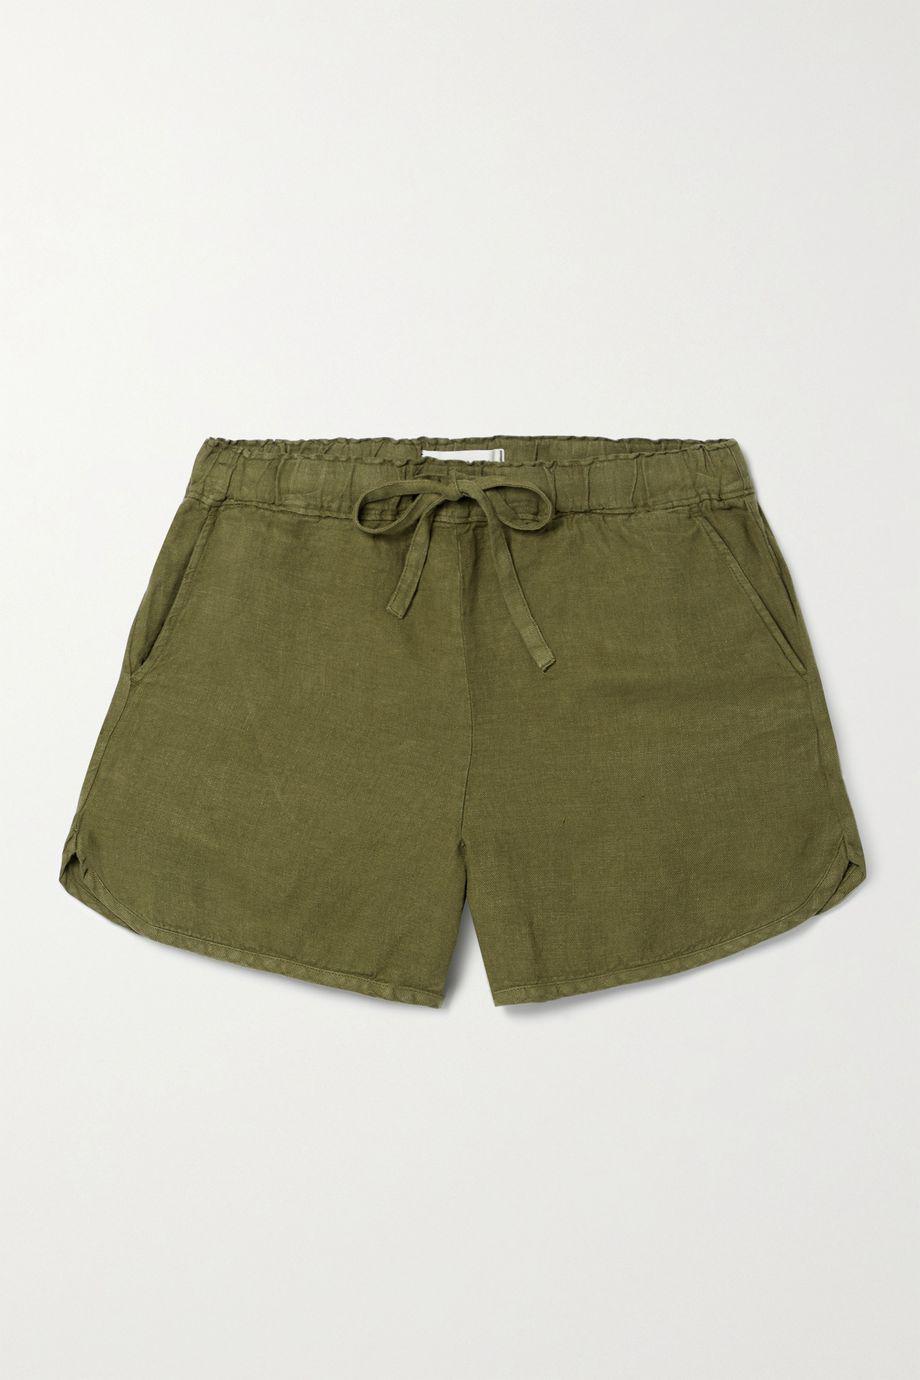 Sunny linen-twill shorts by ALEX MILL